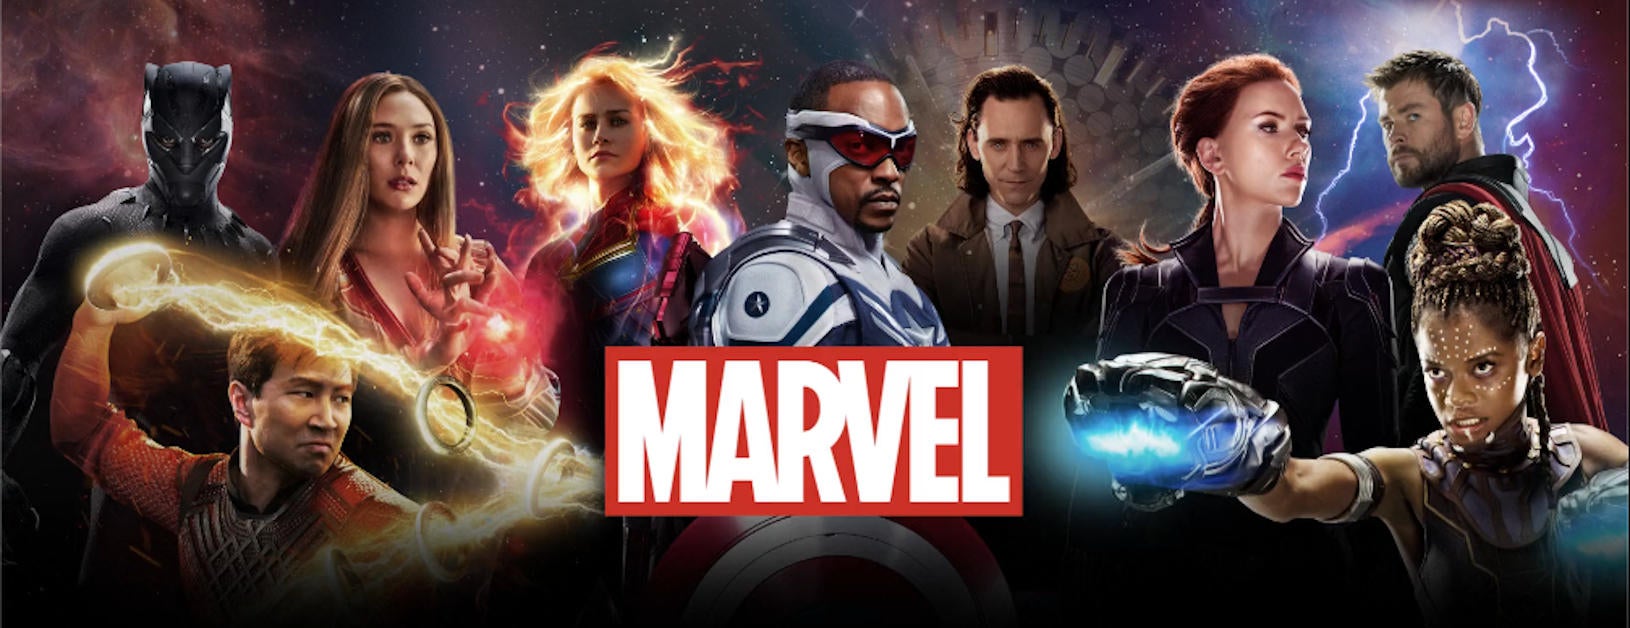 Disney+ Reveals New Updated Marvel Banner